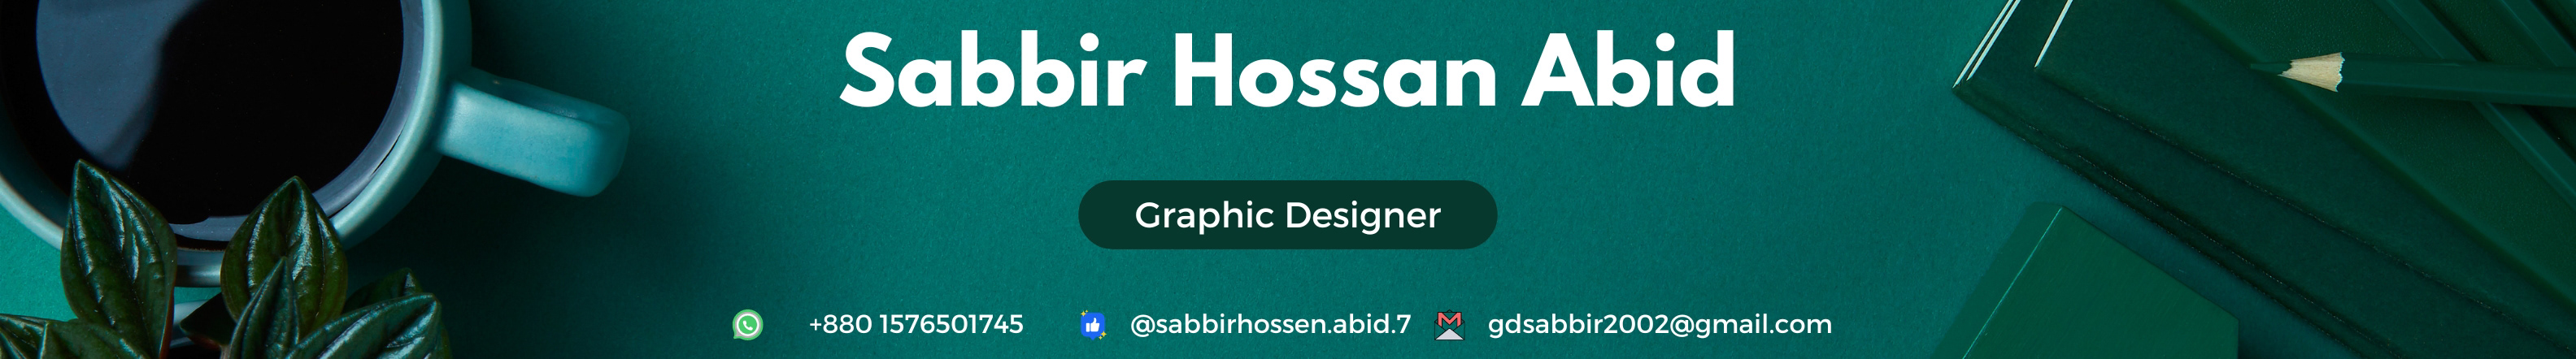 Sabbir Hossan Abid's profile banner